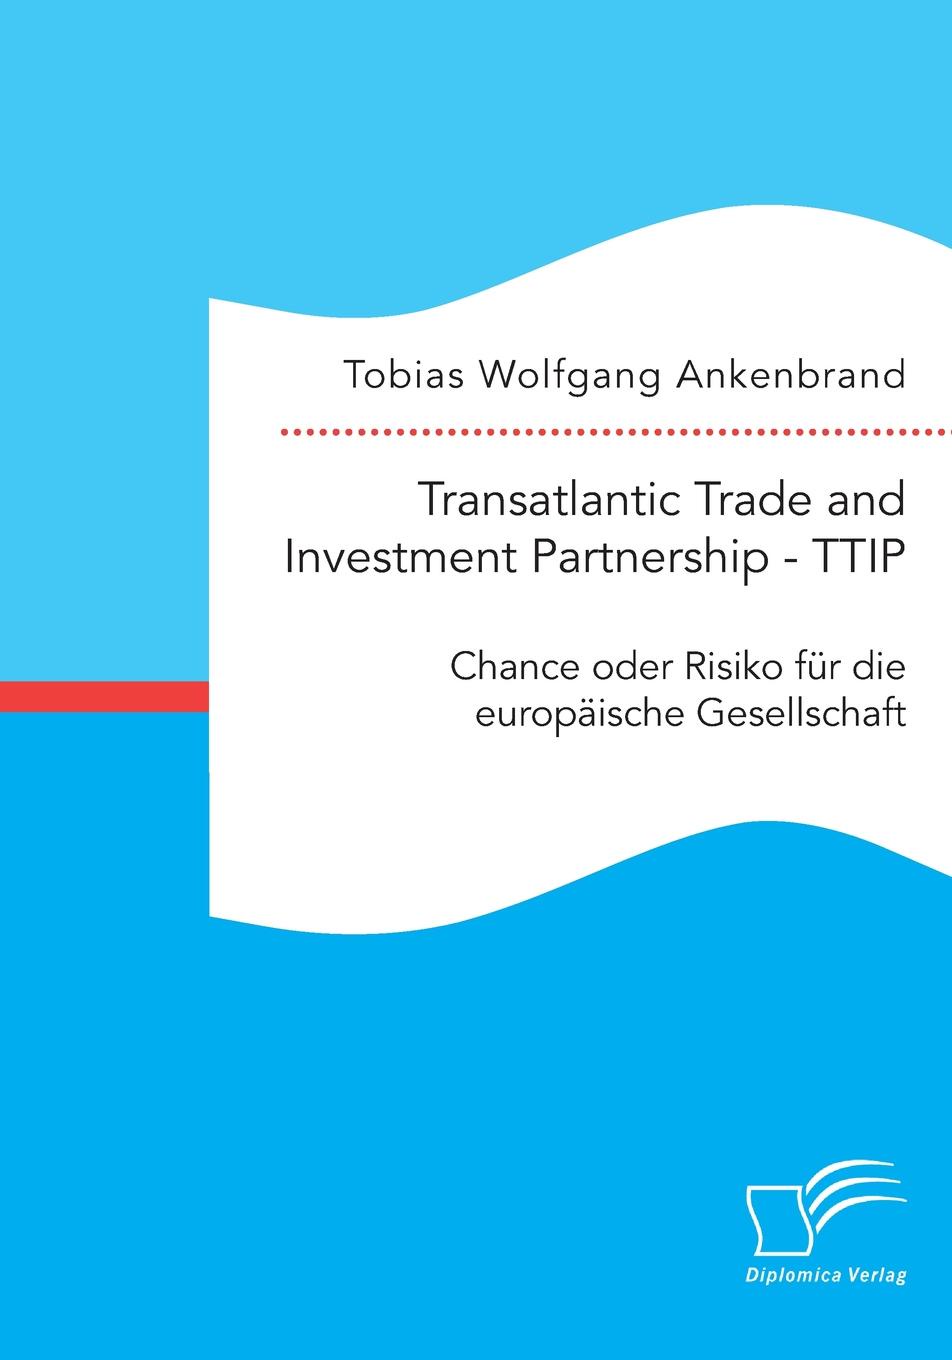 Transatlantic Trade and Investment Partnership - TTIP. Chance oder Risiko fur die europaische Gesellschaft